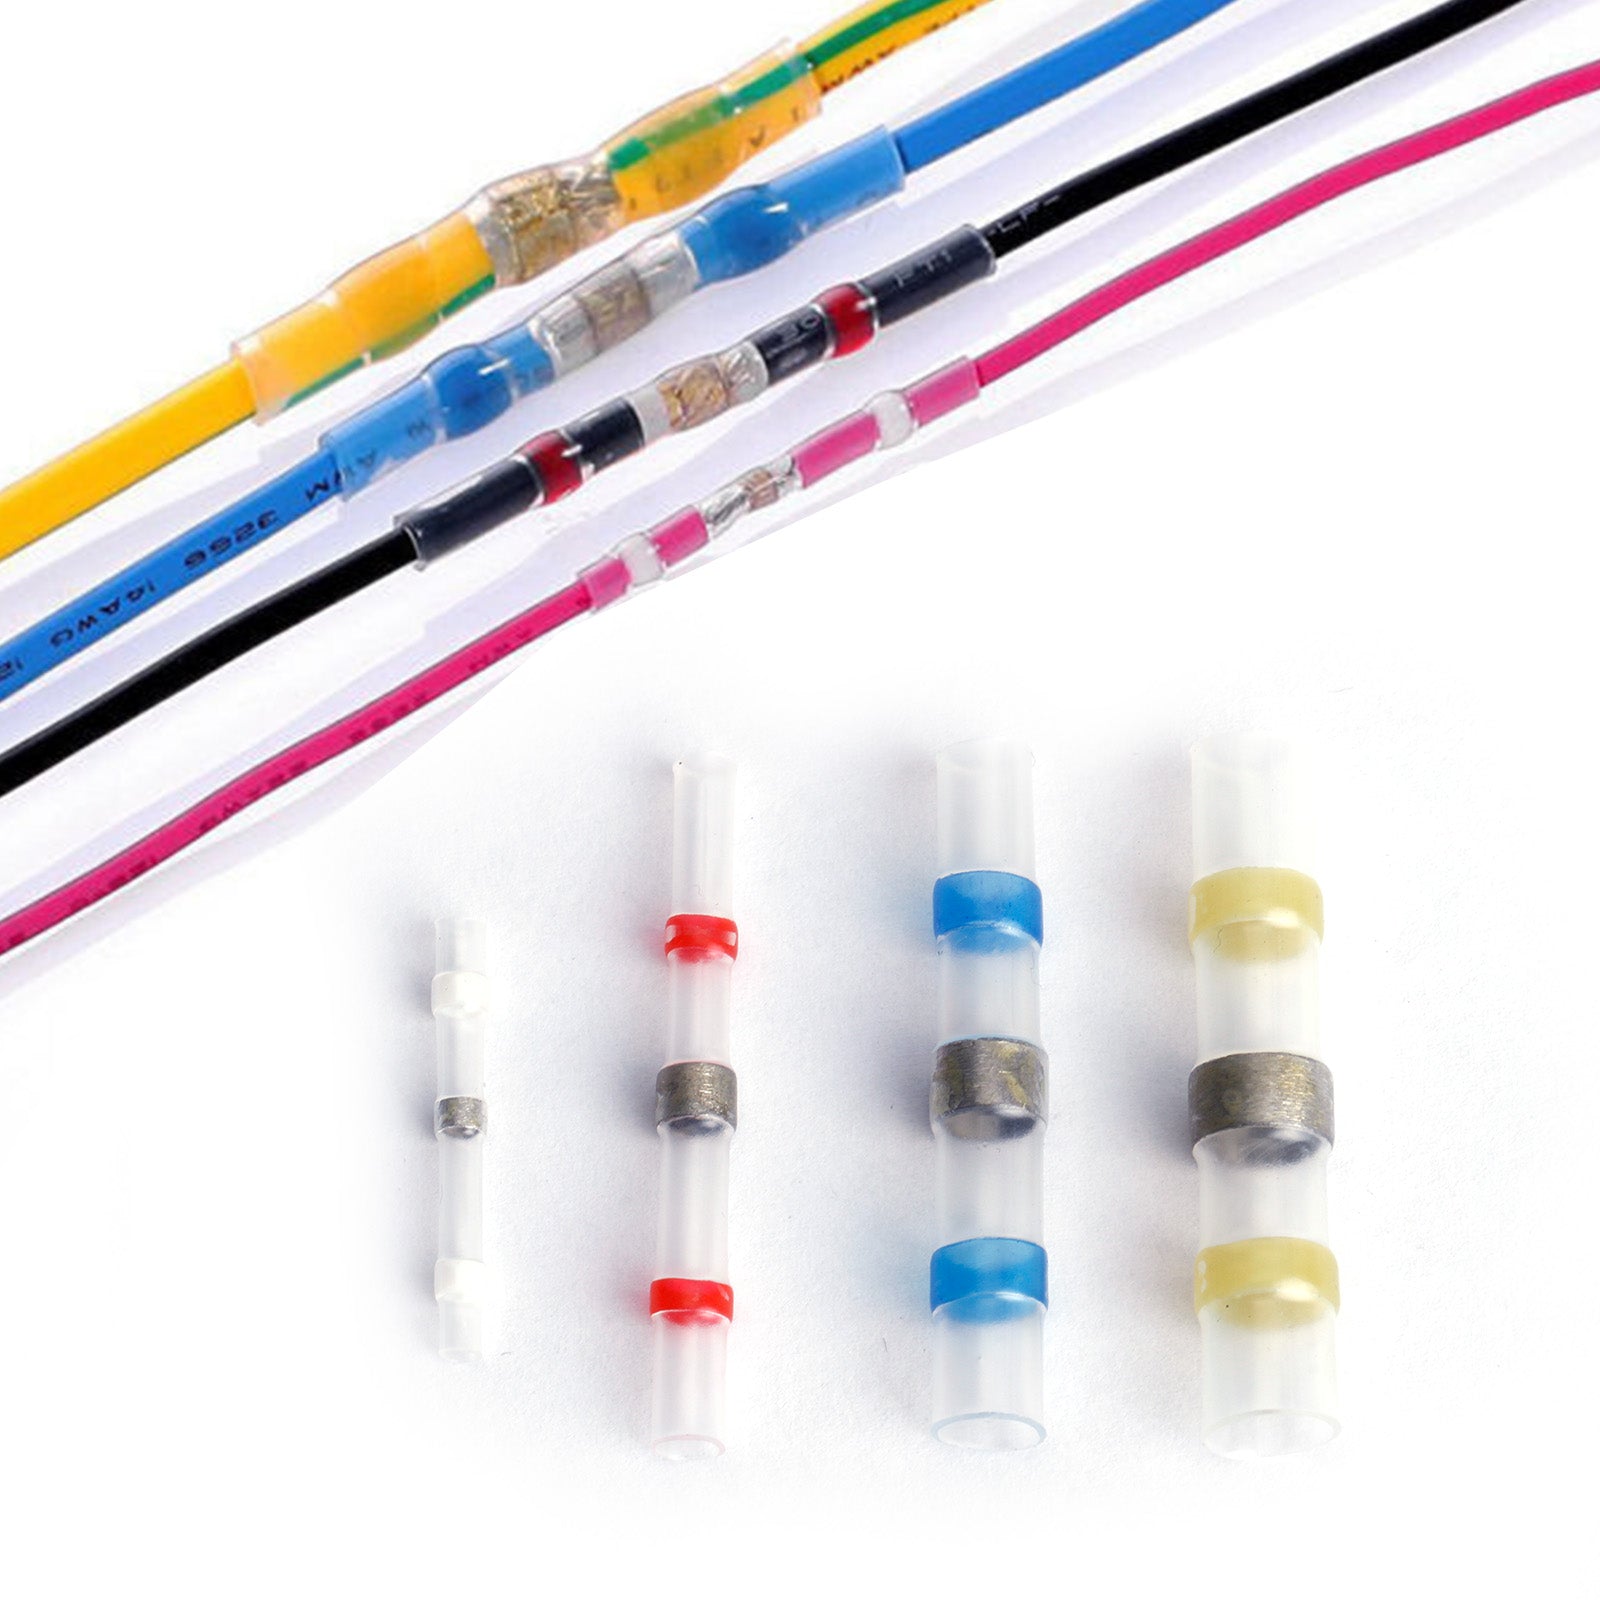 Red Heat Shrink Solder Sleeve Wire Connectors - Electrical Connectors - Heat Shrink - spo-cs-disabled - spo-default - s